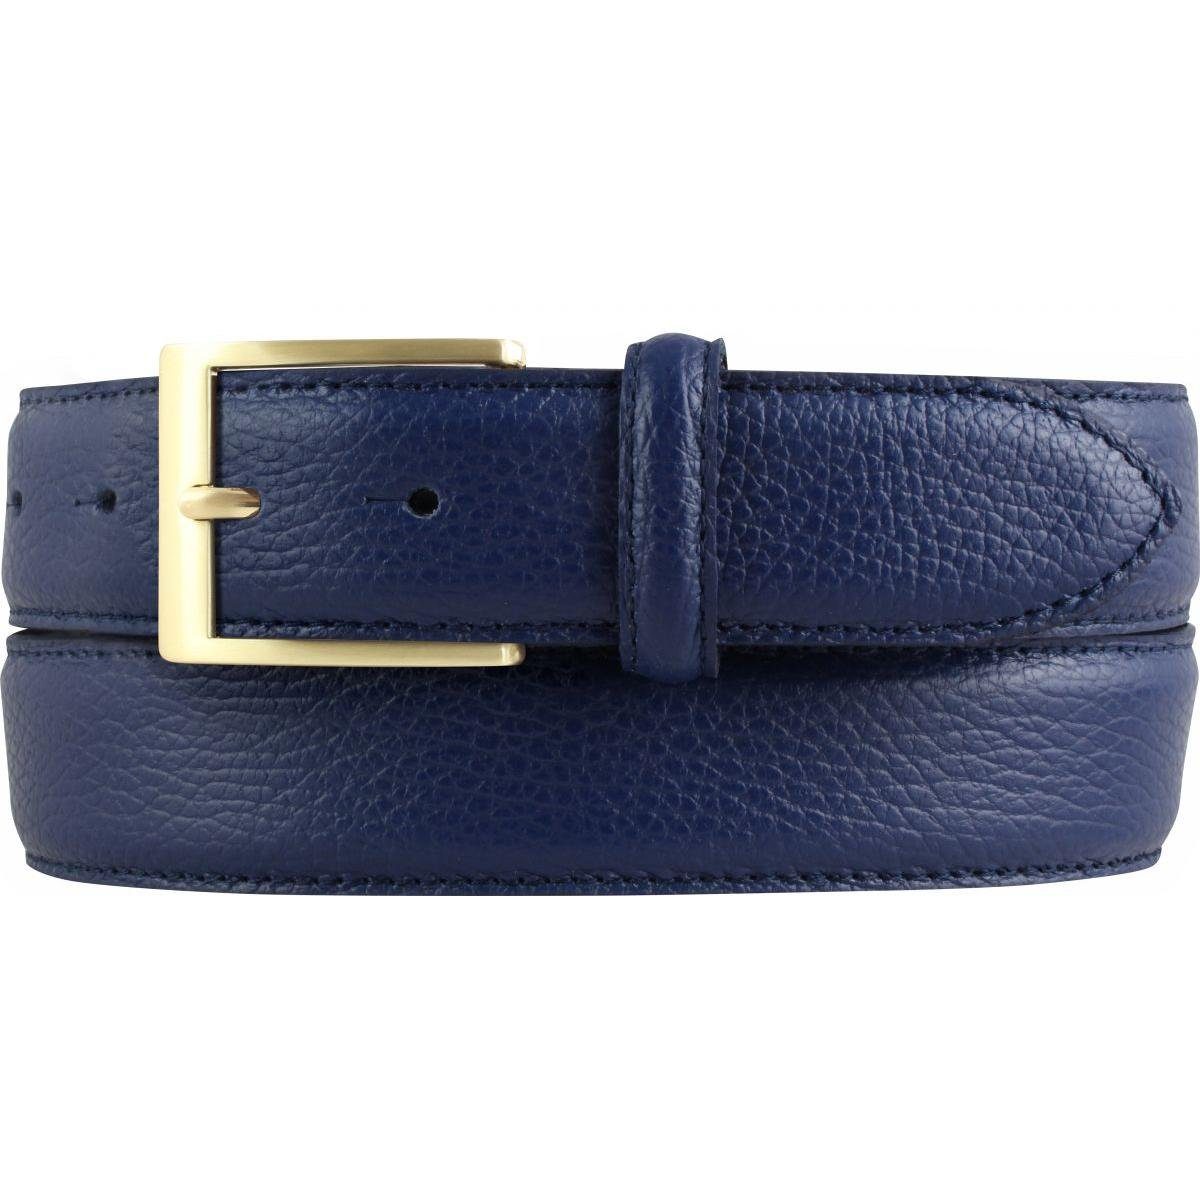 BELTINGER Ledergürtel Italienischer Anzug-Gürtel, 35 mm breit, Herren, Anzuggürtel, Hosengür Blau, Gold